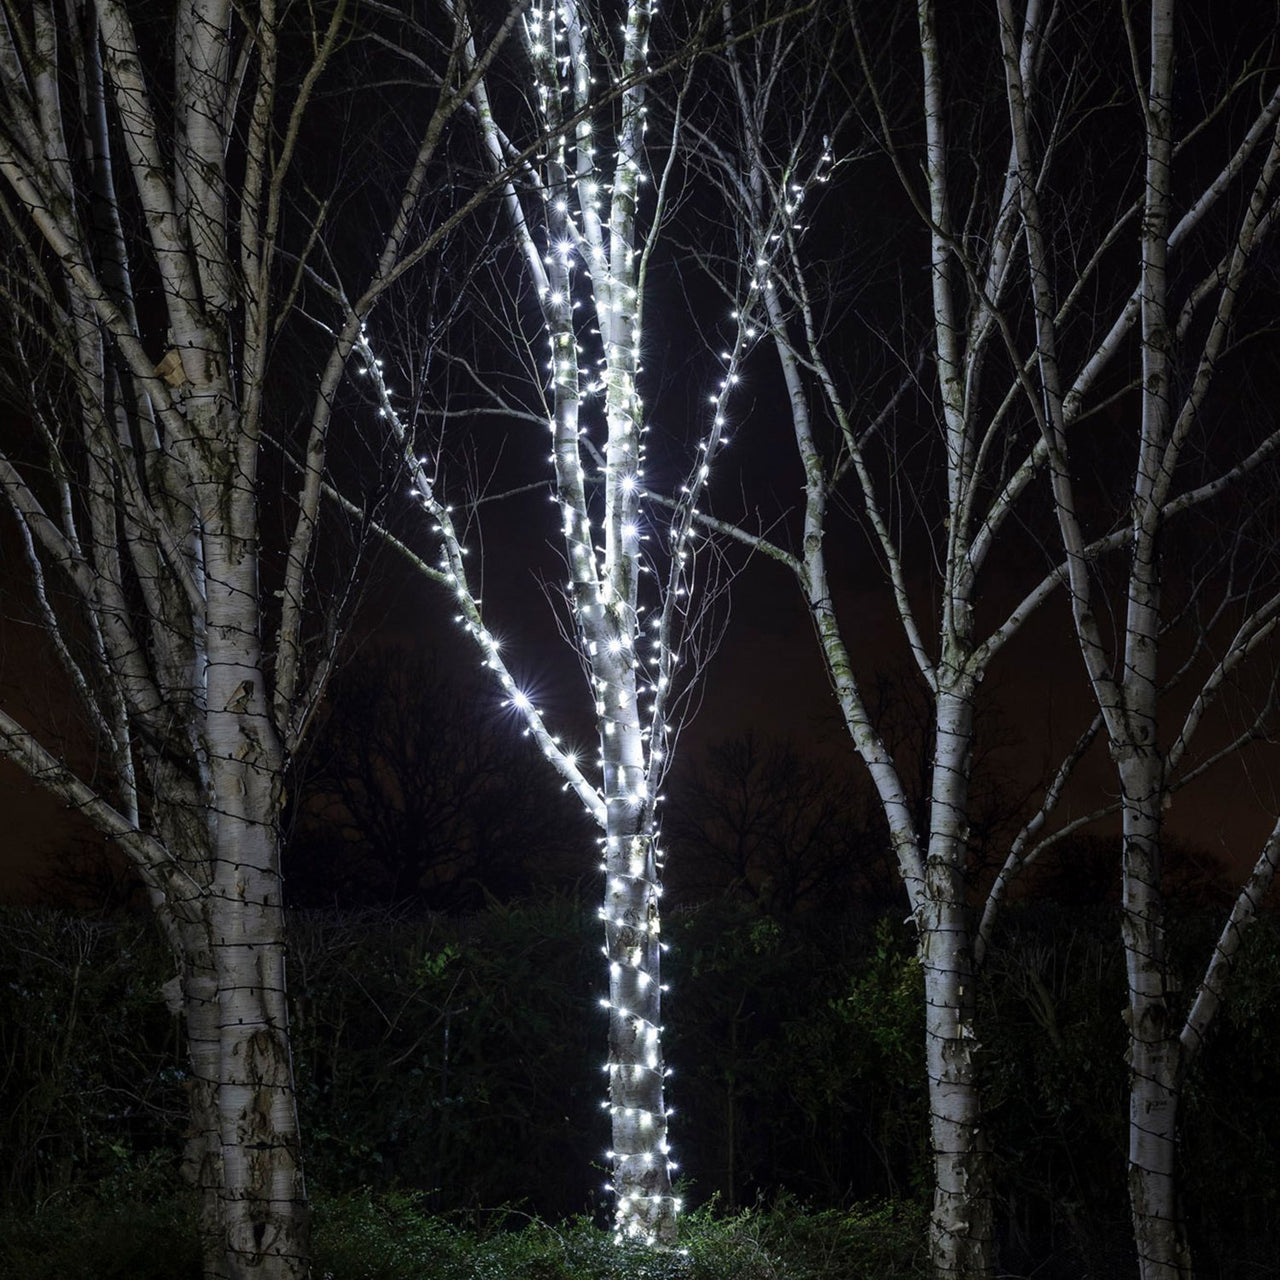 Guirlande lumineuse LED extérieure grande longueur 1000 LED blanc